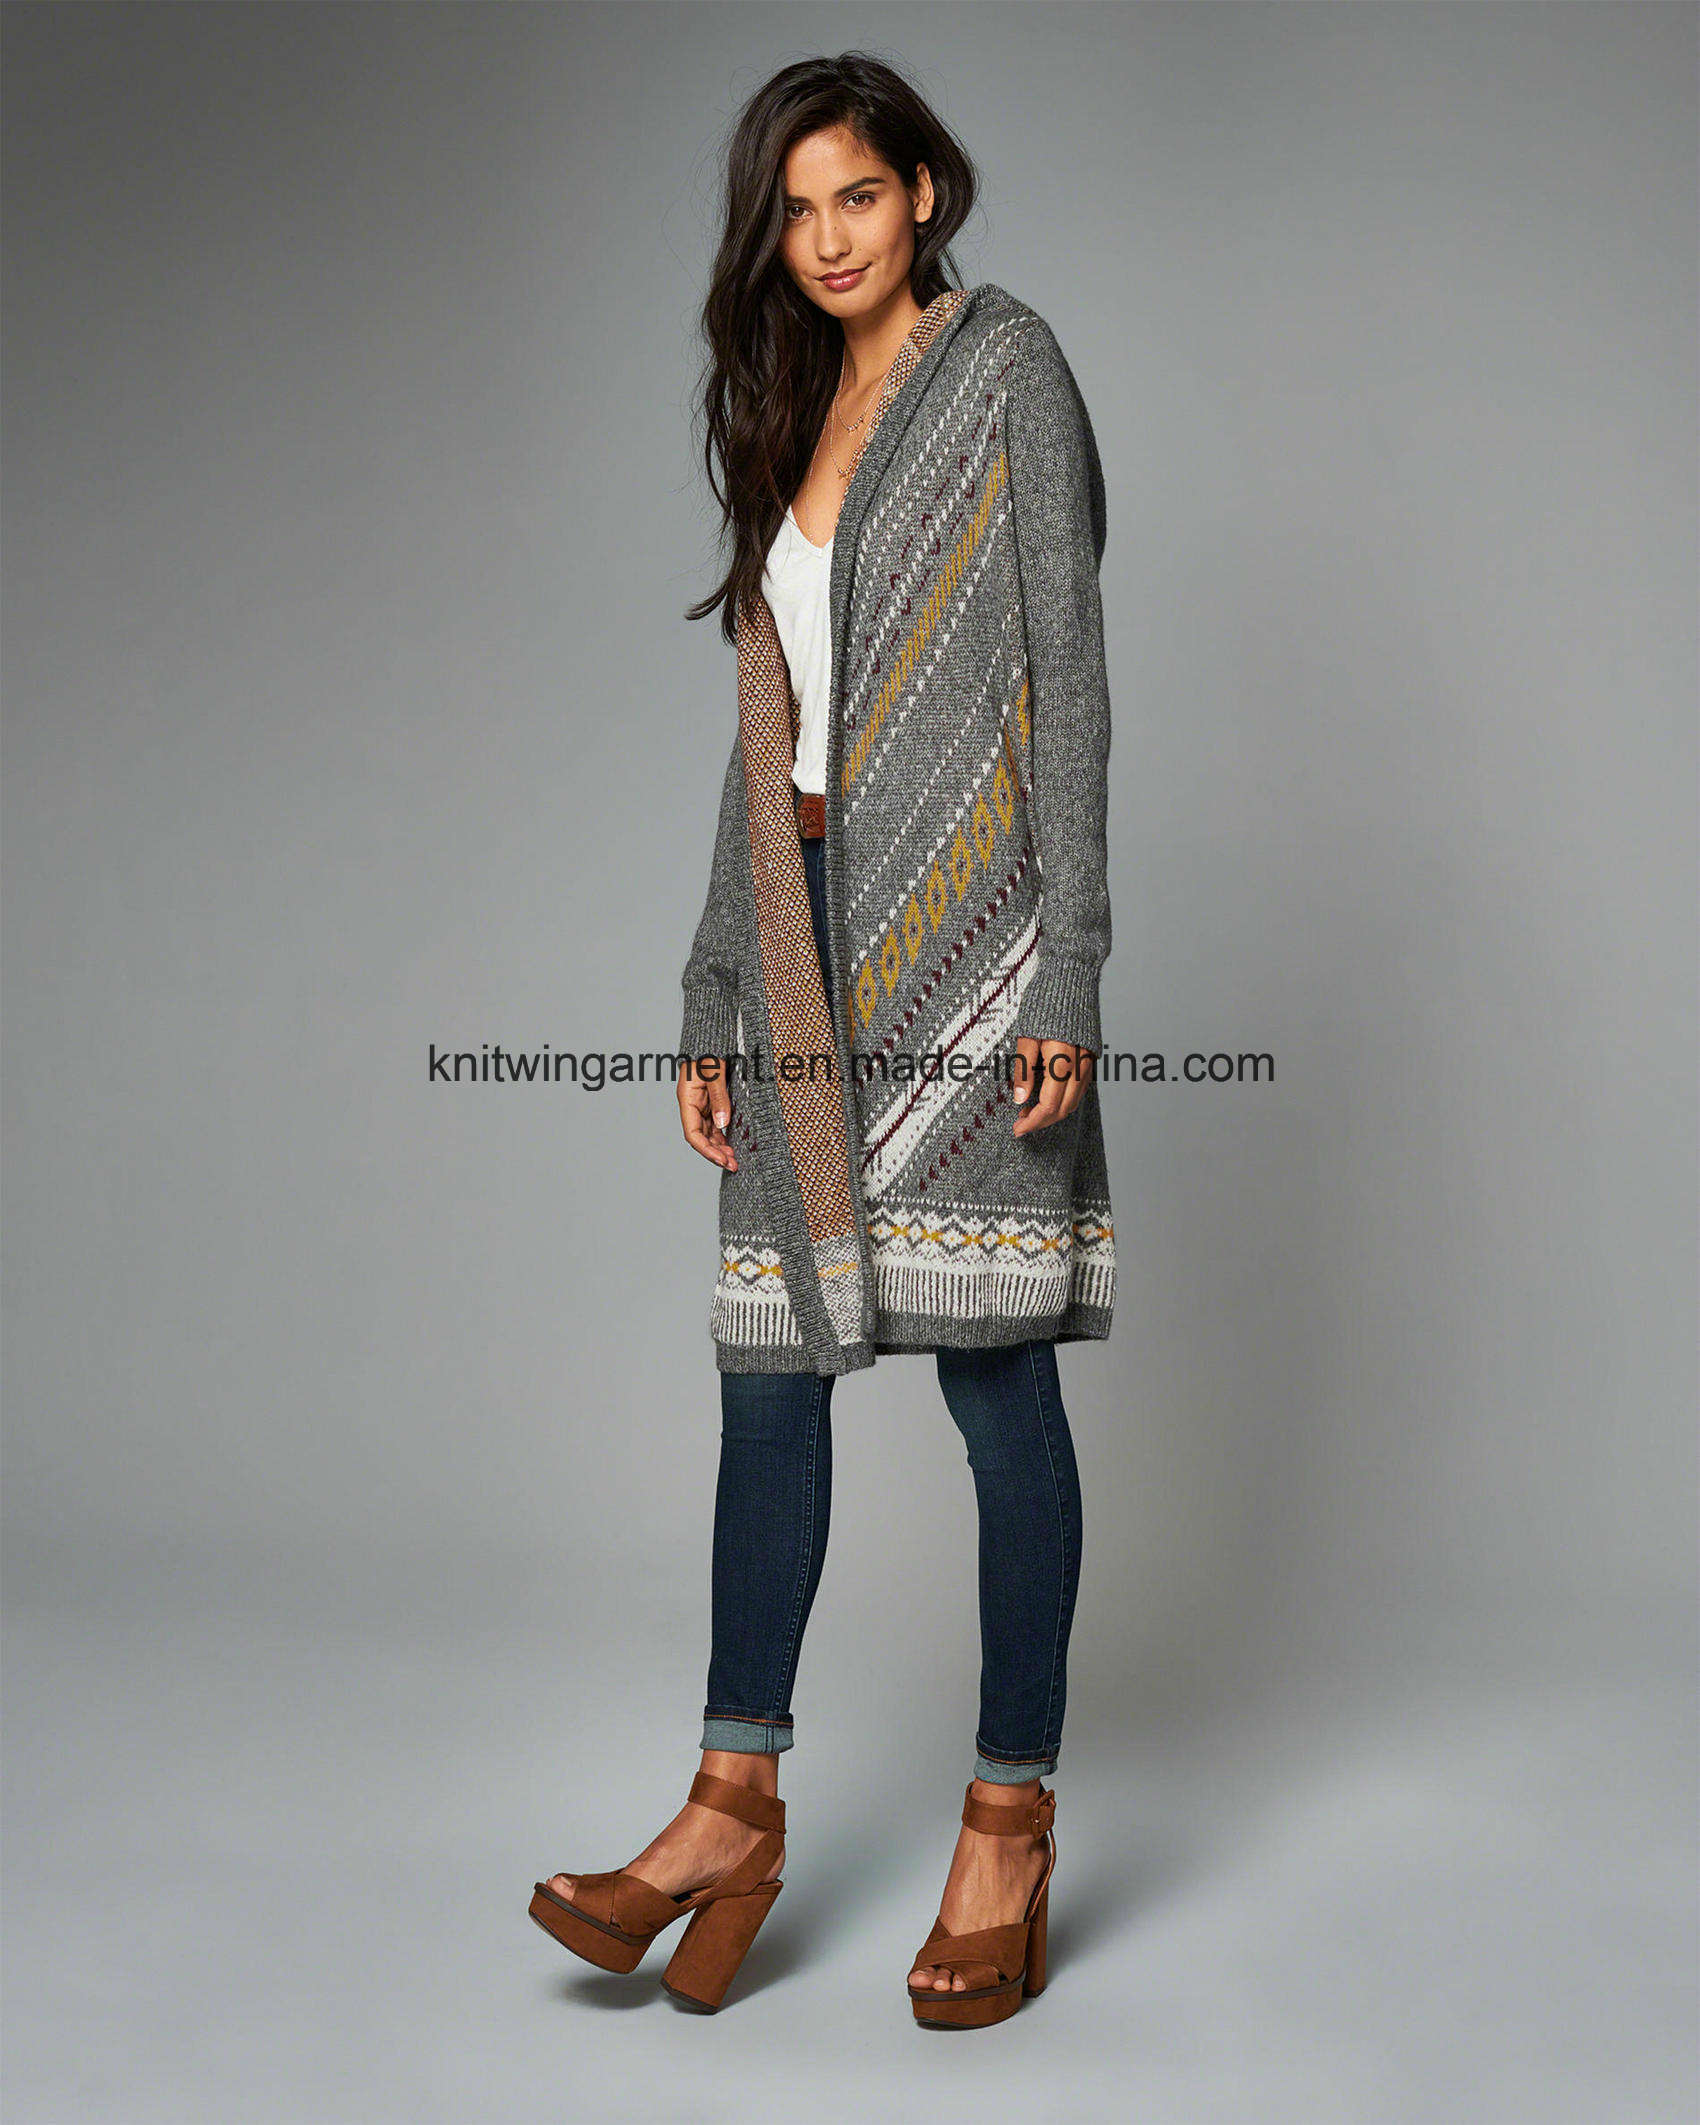 OEM Lady Fashion Hot Sales Long Cardigan Sweater